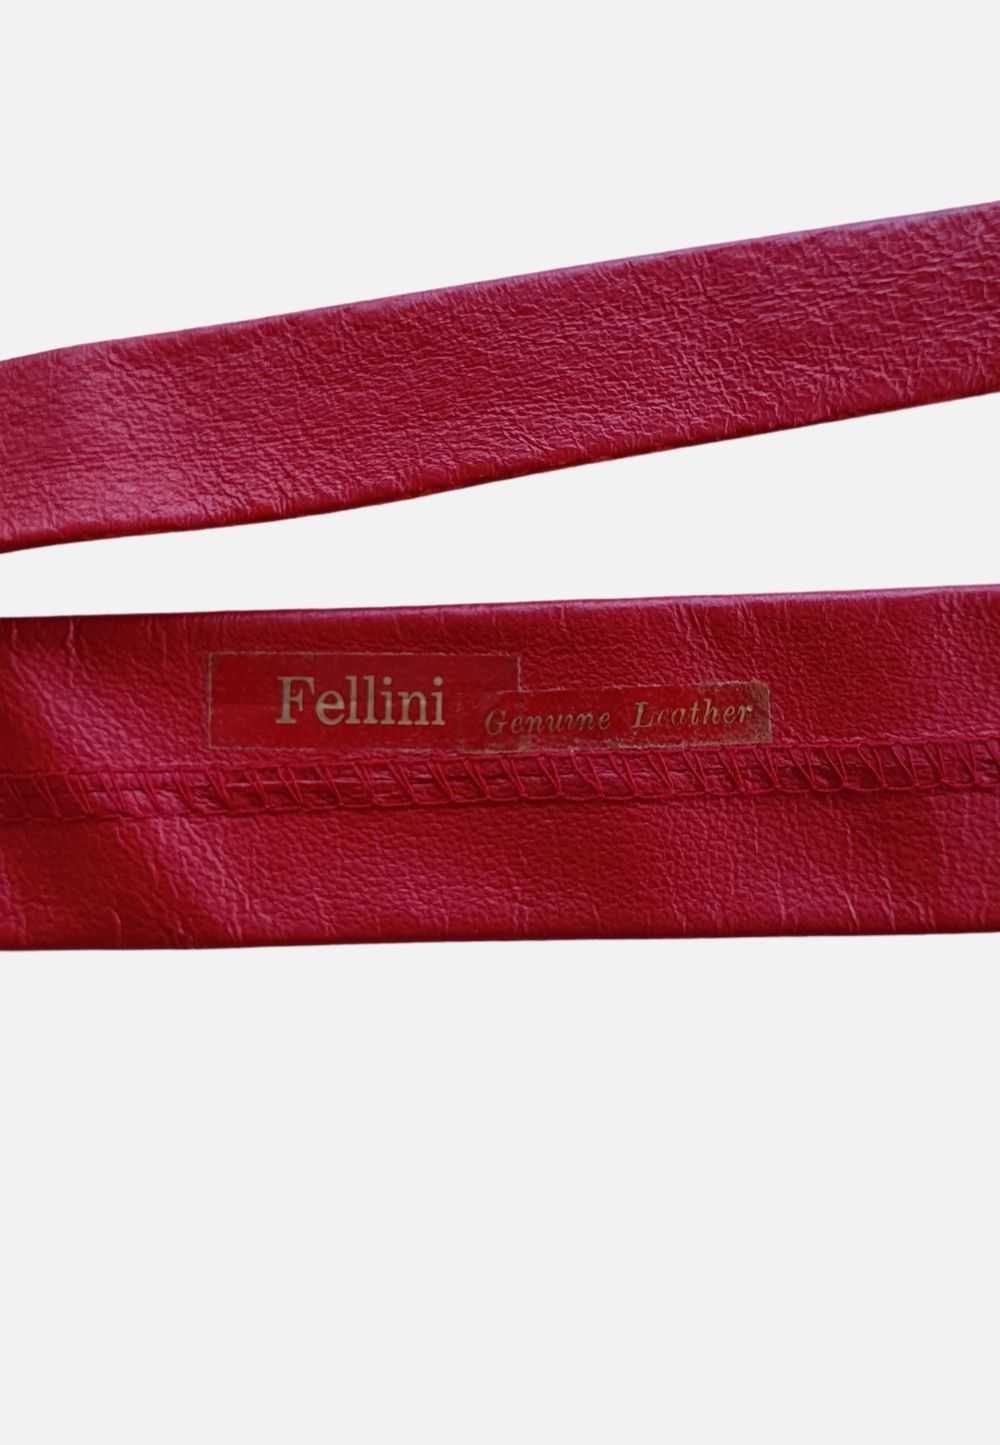 Fellini Leather Tie - image 4